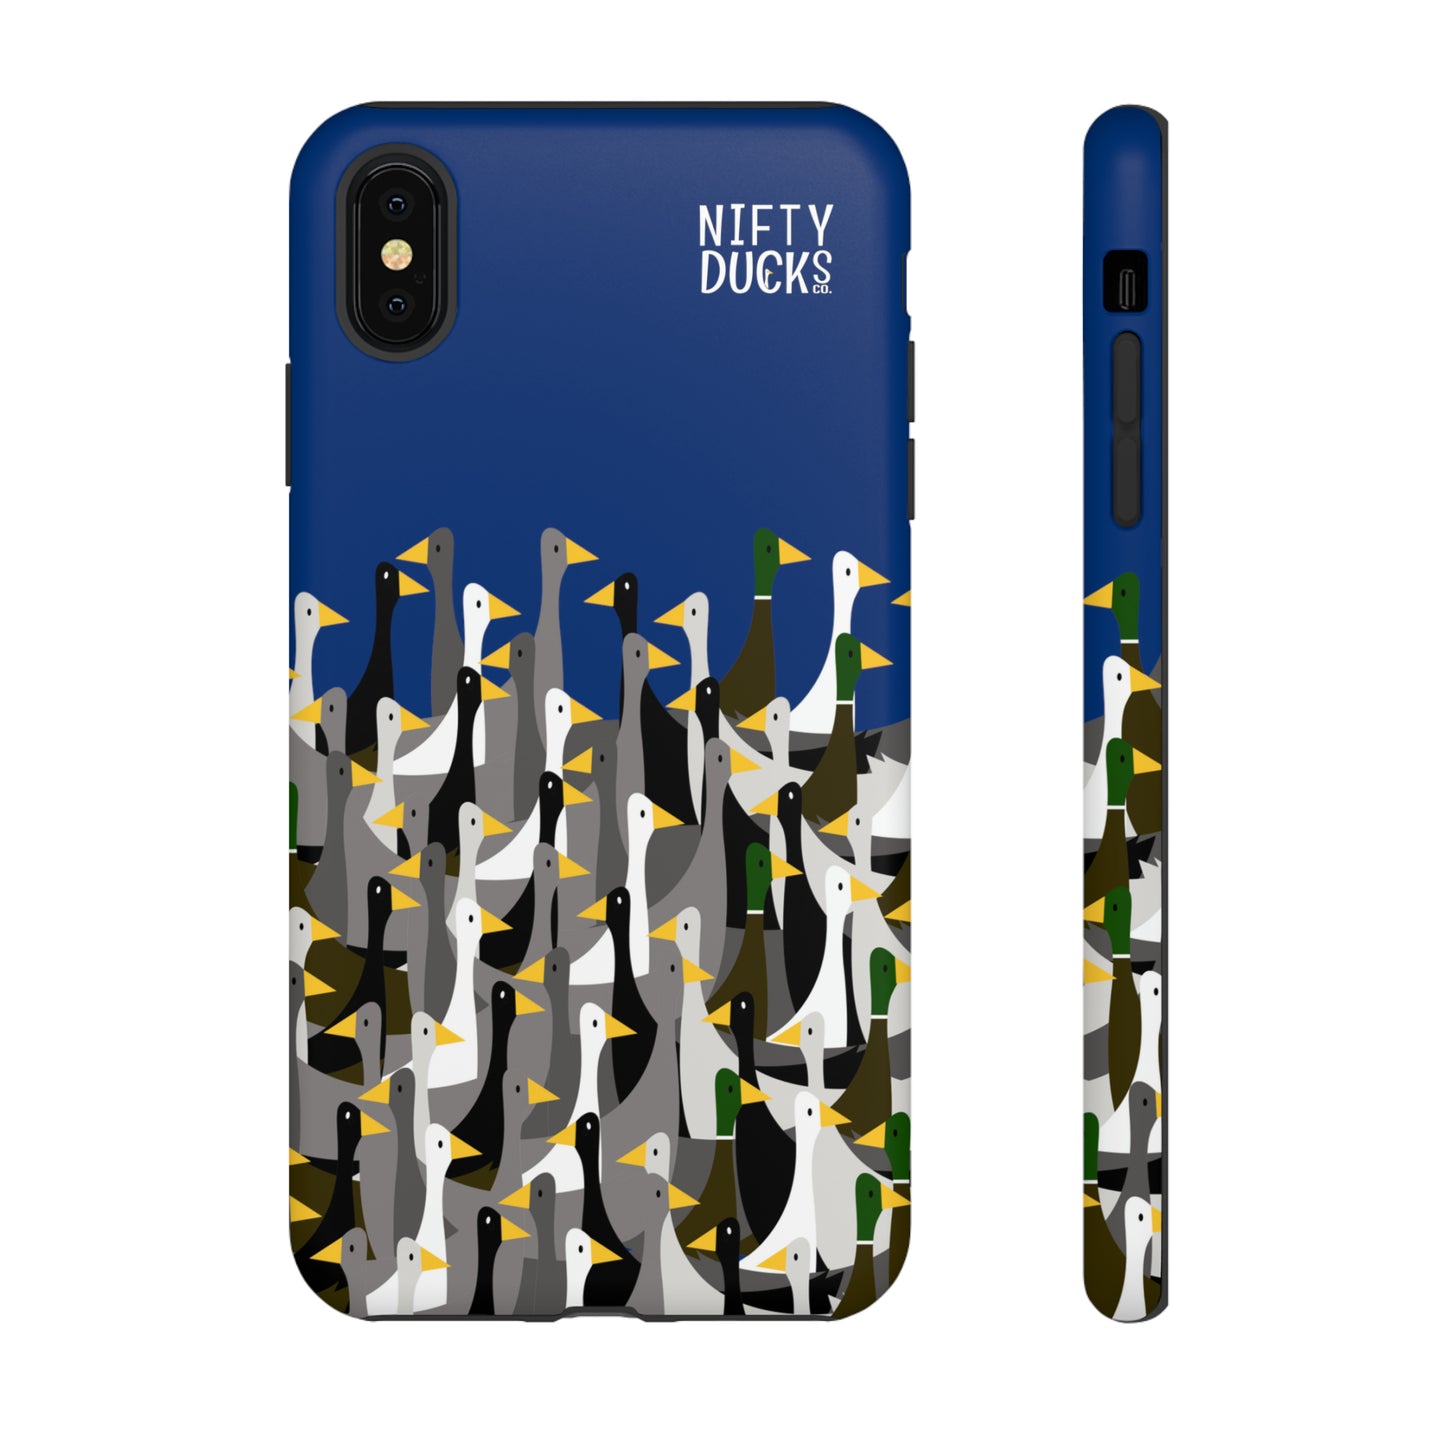 That is a LOT of ducks - Logo - Blue 003377 - Tough Cases